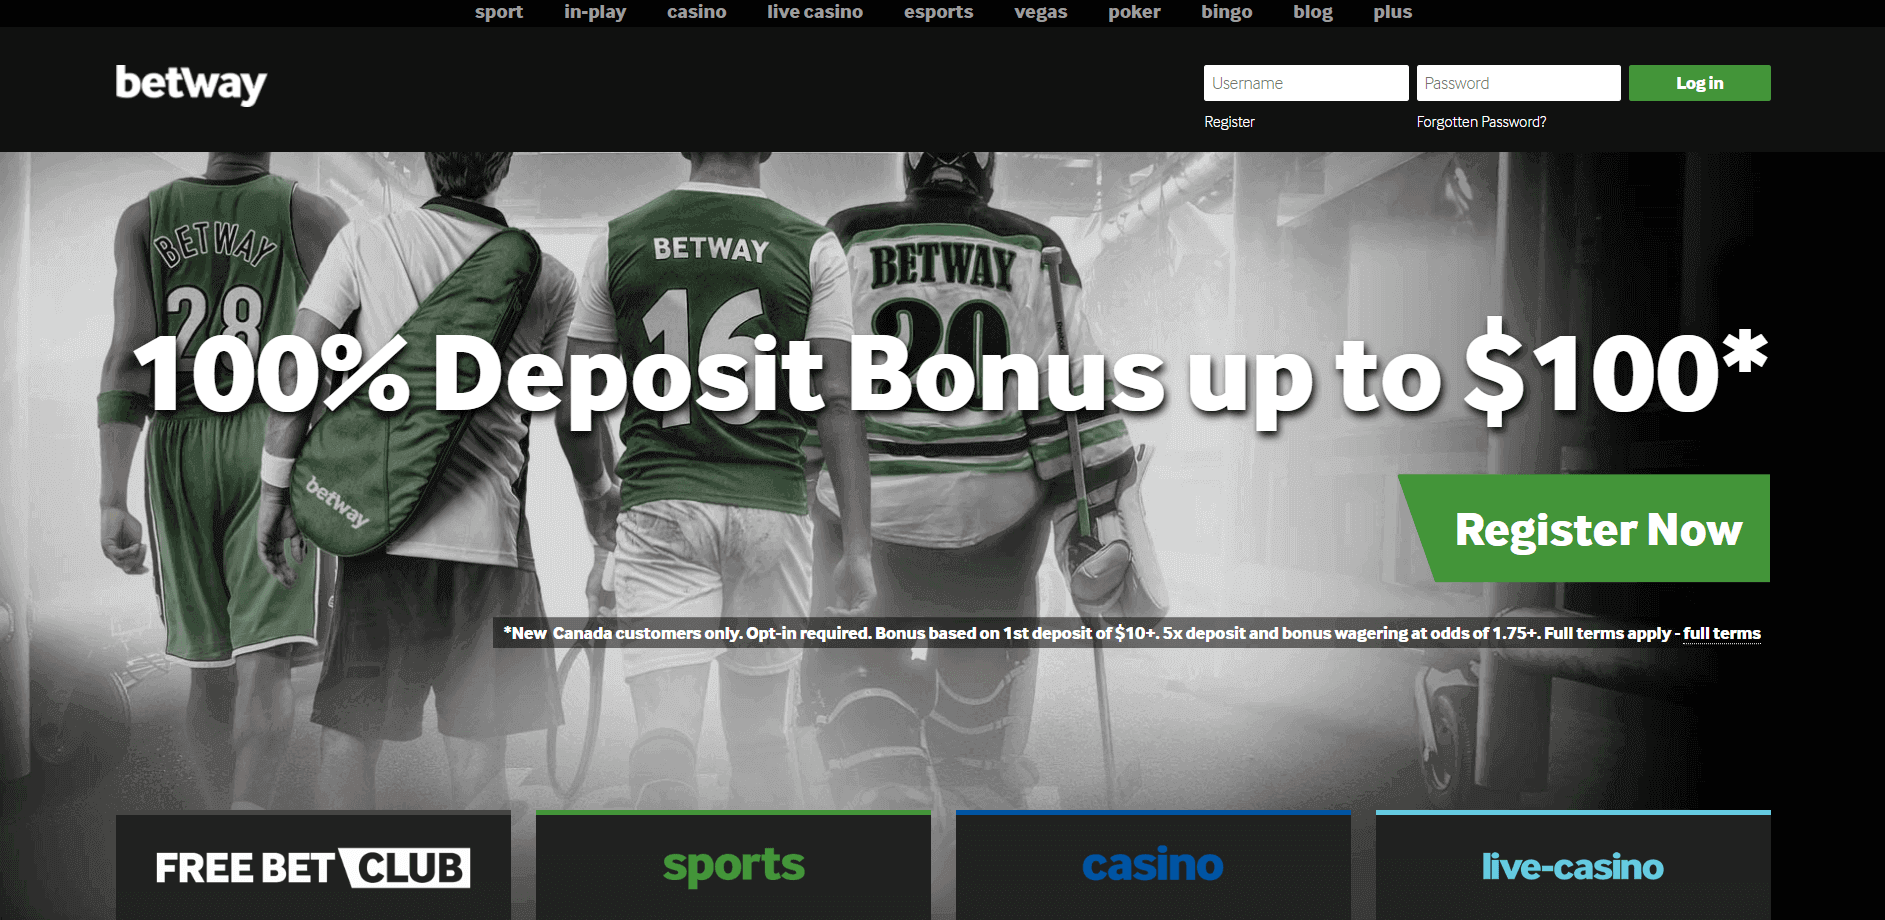 Betway Online Casino and Sportsbook screenshot with $100 Bonus Offer